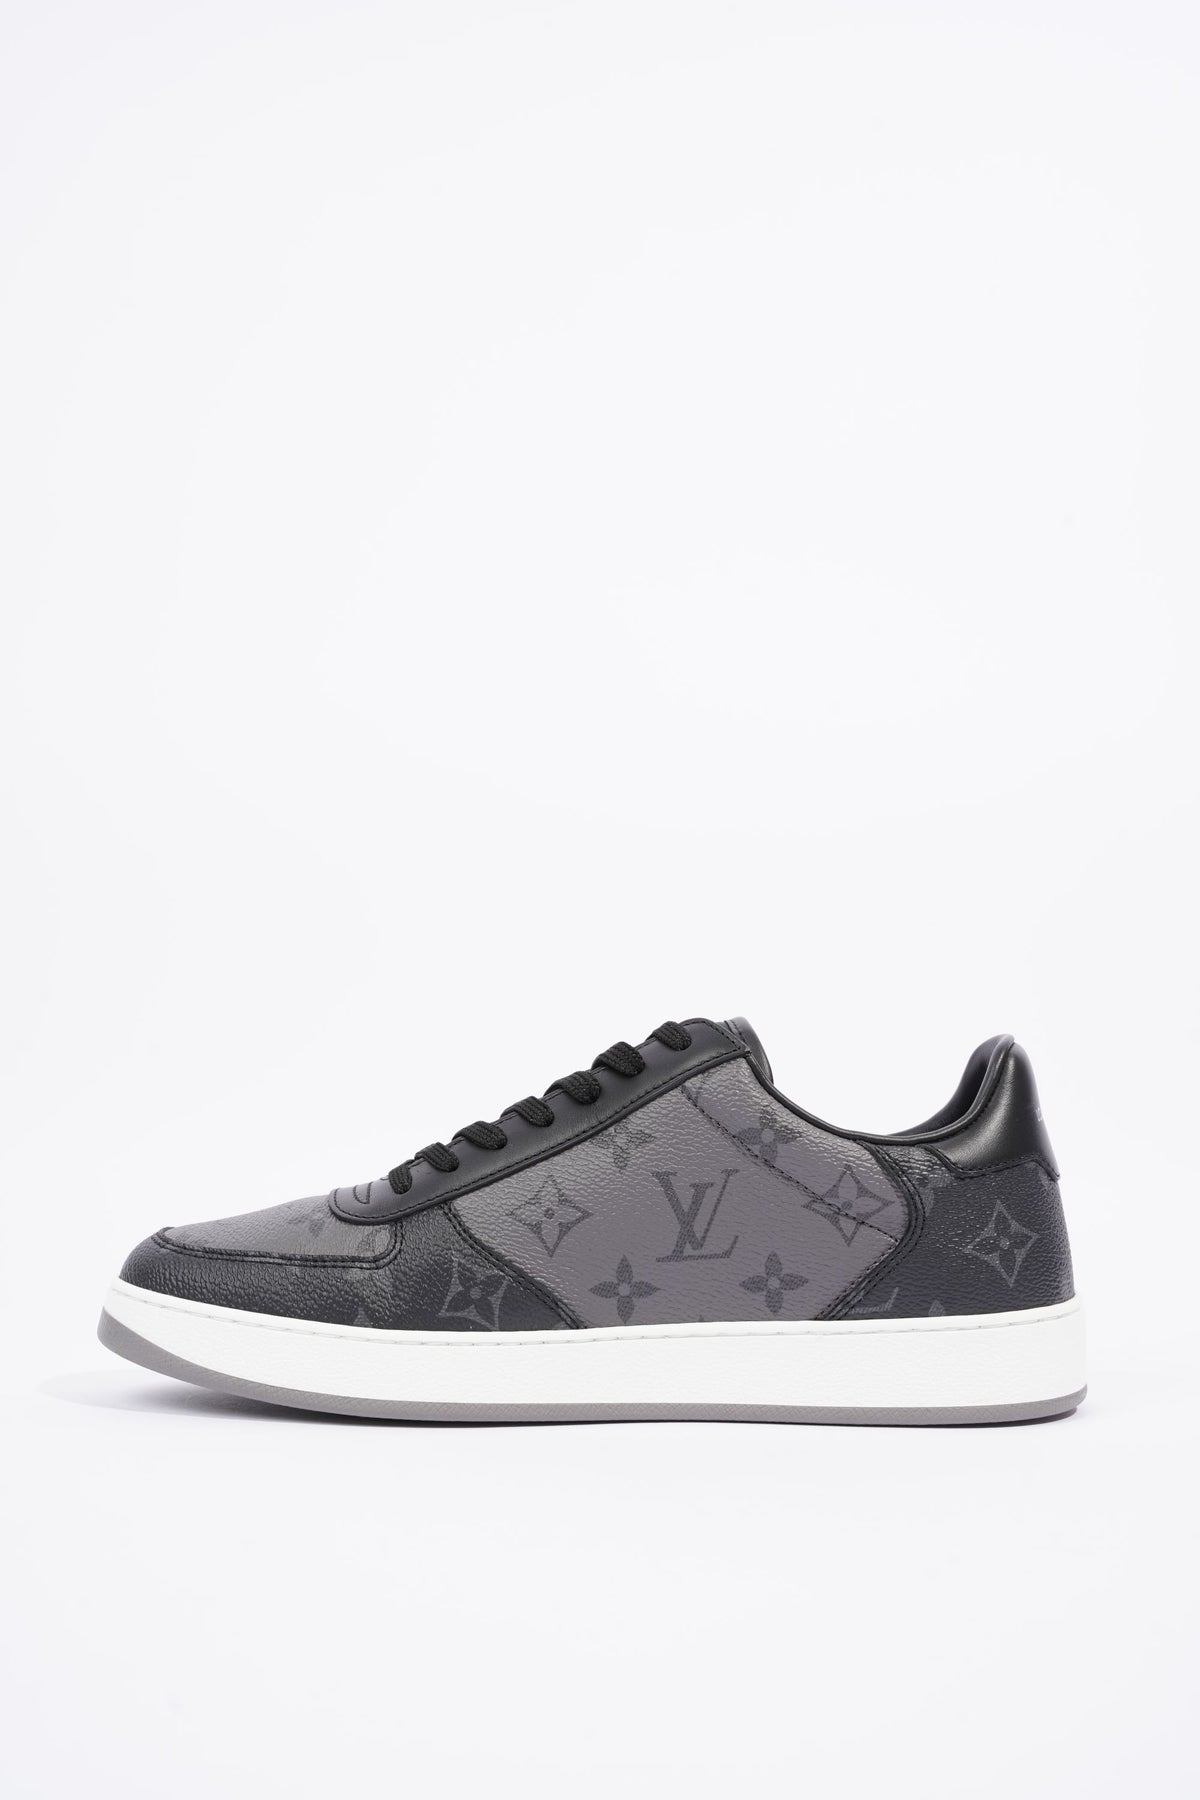 Louis Vuitton Rivoli Sneaker Boot, Grey, 6